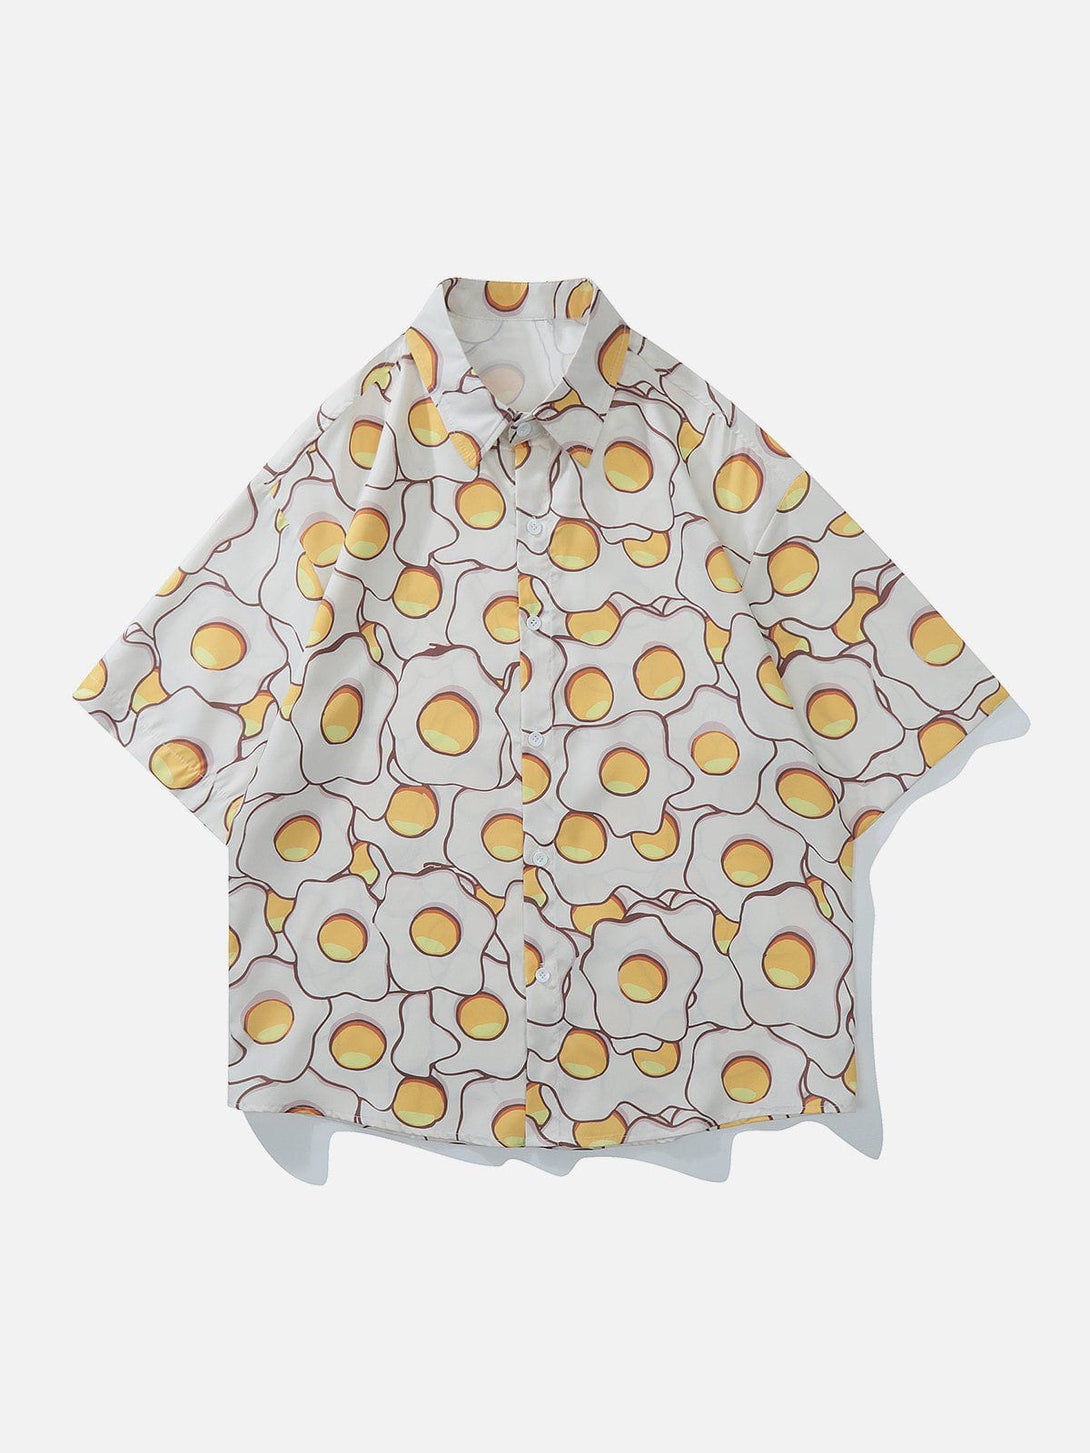 Majesda® - Fried Eggs Element Short Sleeve Shirts outfit ideas streetwear fashion